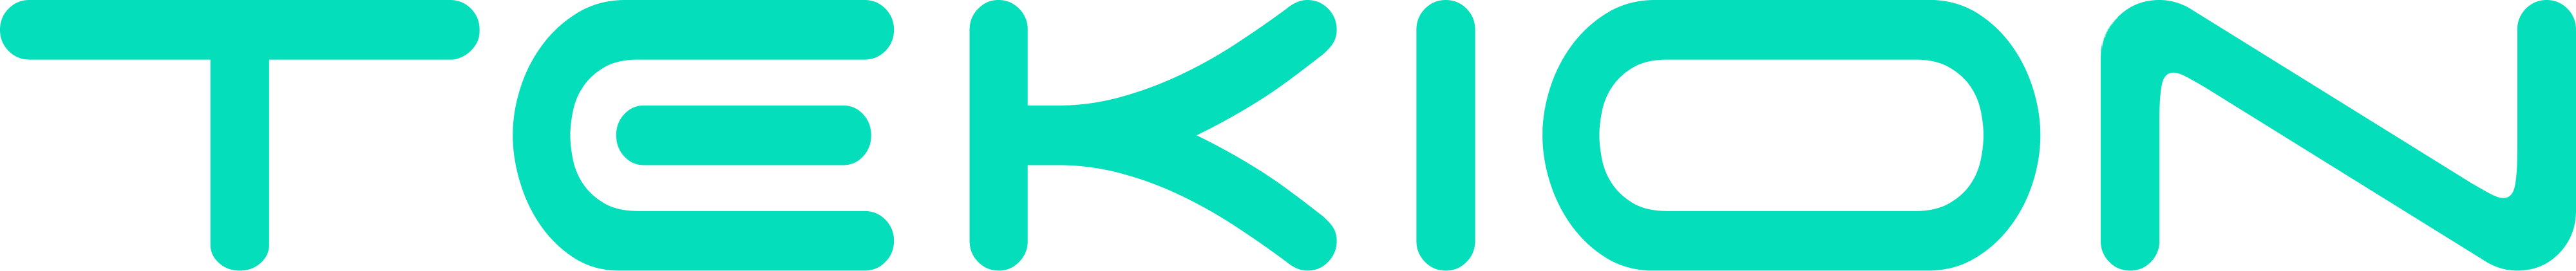 Tekion-Logo